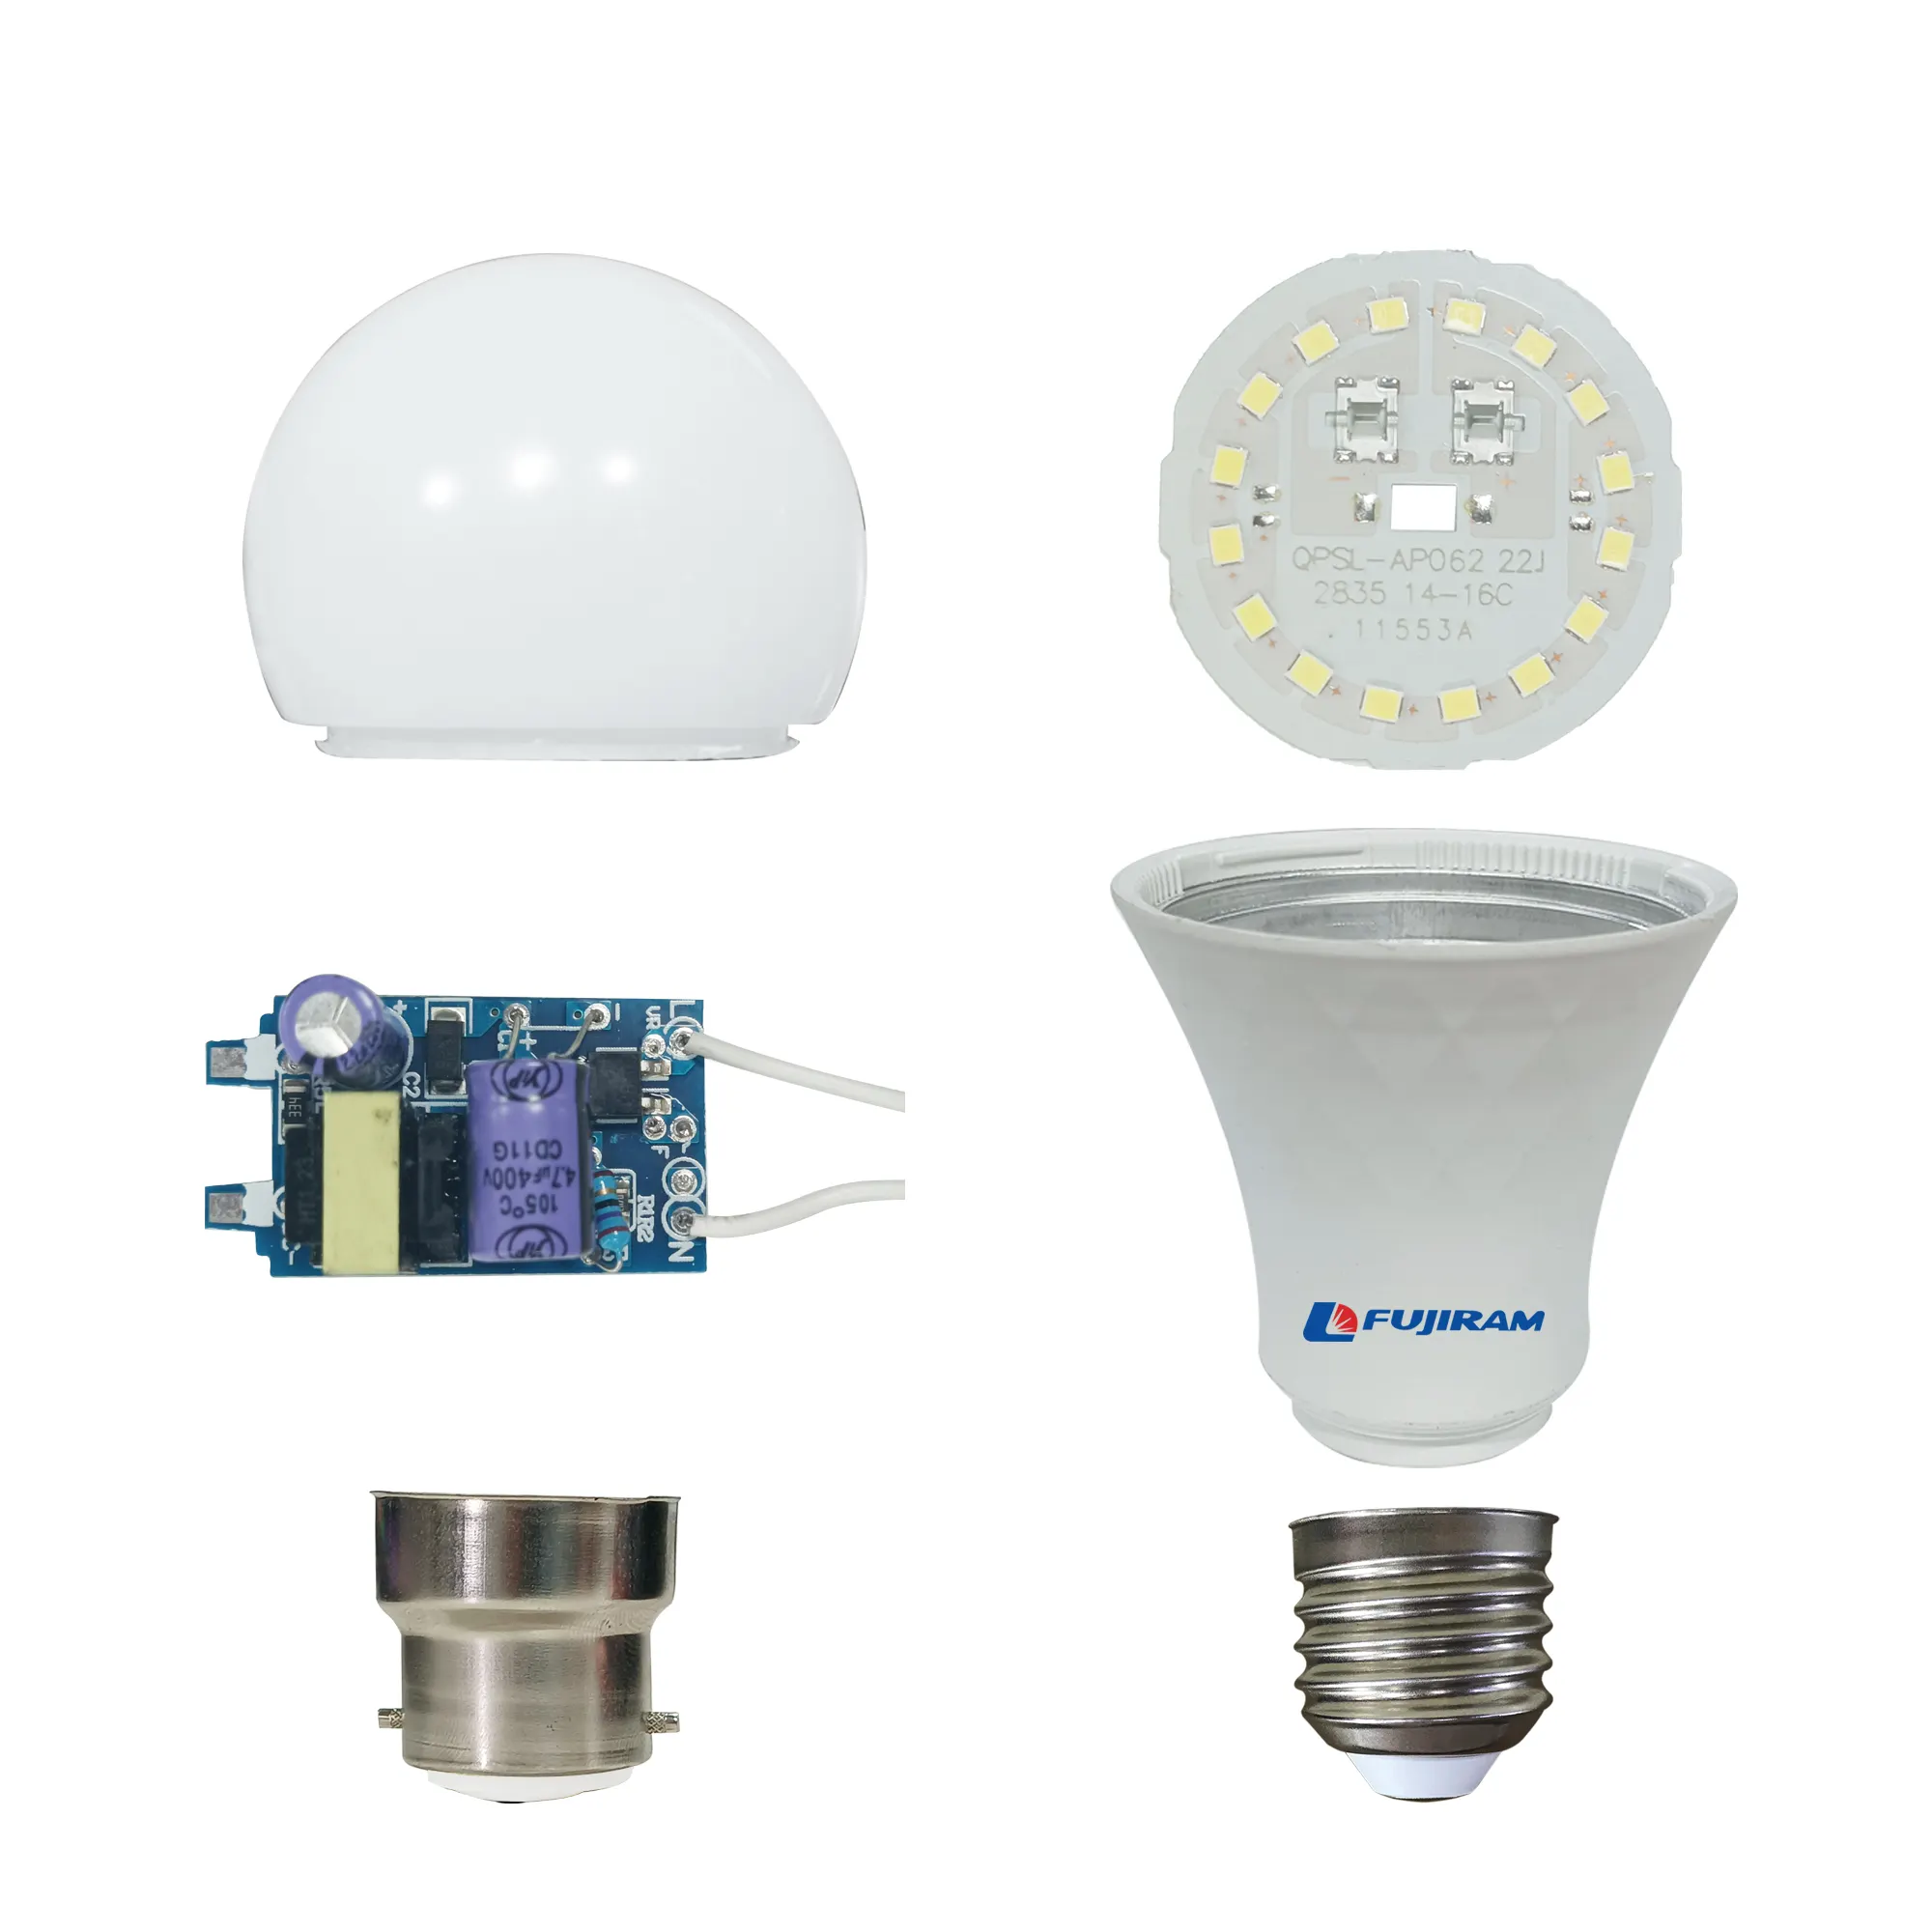 Fujiram led bulb skd price 3w 5w 7w 9w 10w 12w 15w 18w 20w 24w led bulb raw material